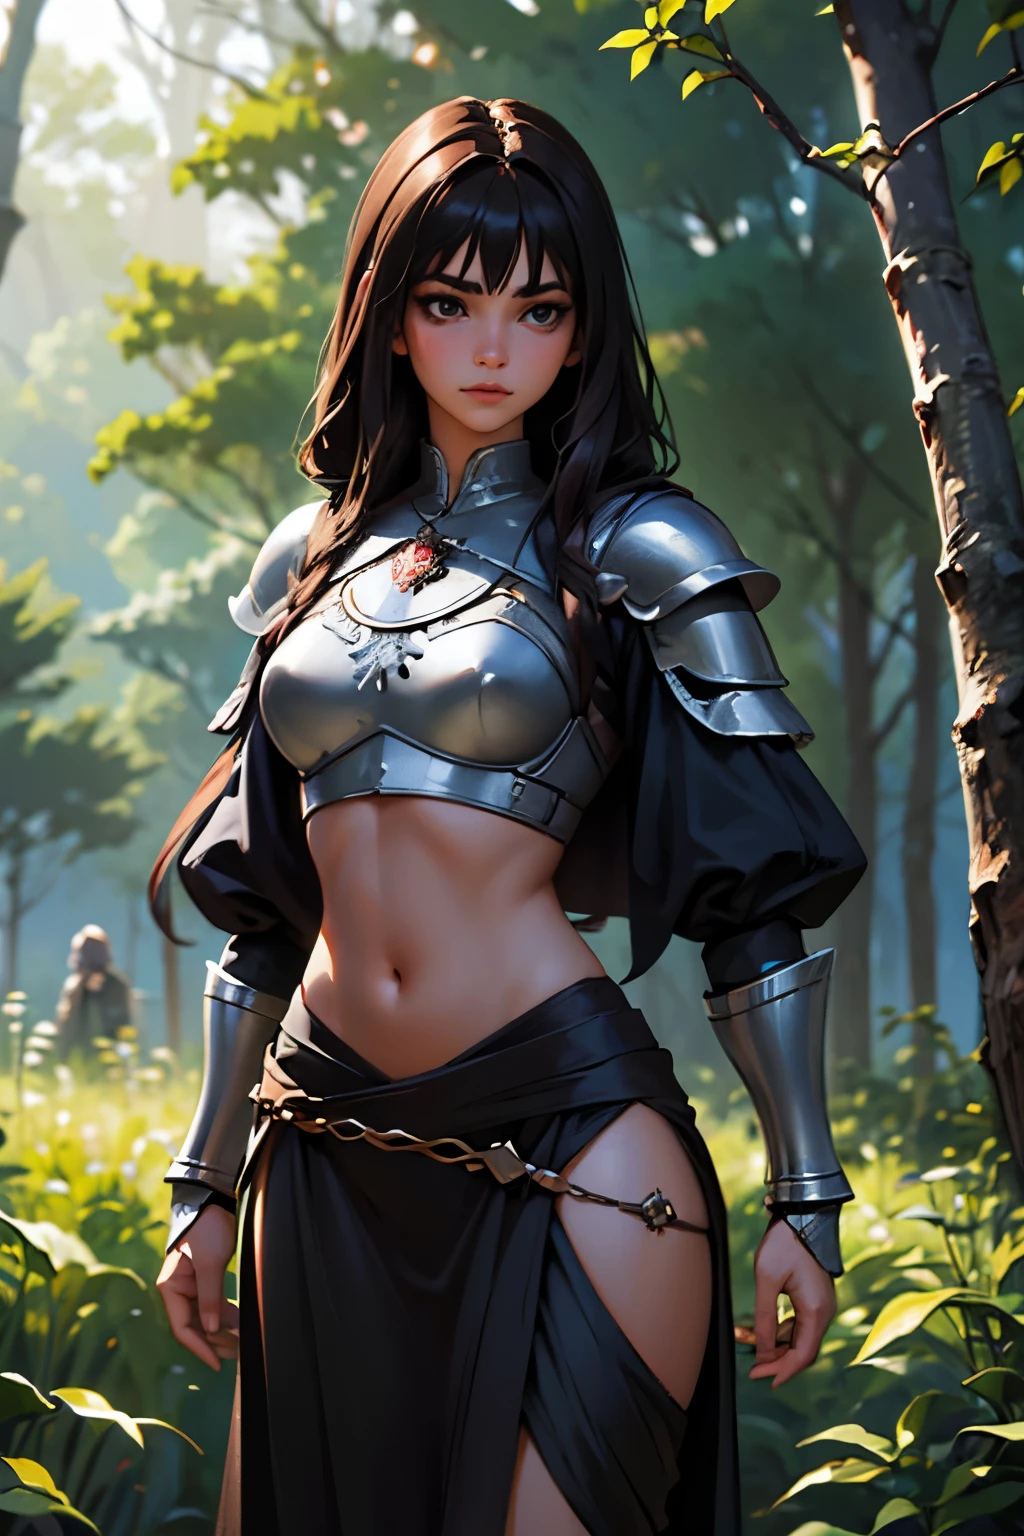 ((estilo ultra realista)), (1 garota, indiano, Cabelo escuro bonito, corpo magro e bonito, vestindo armadura medieval preta clara), (em uma floresta)